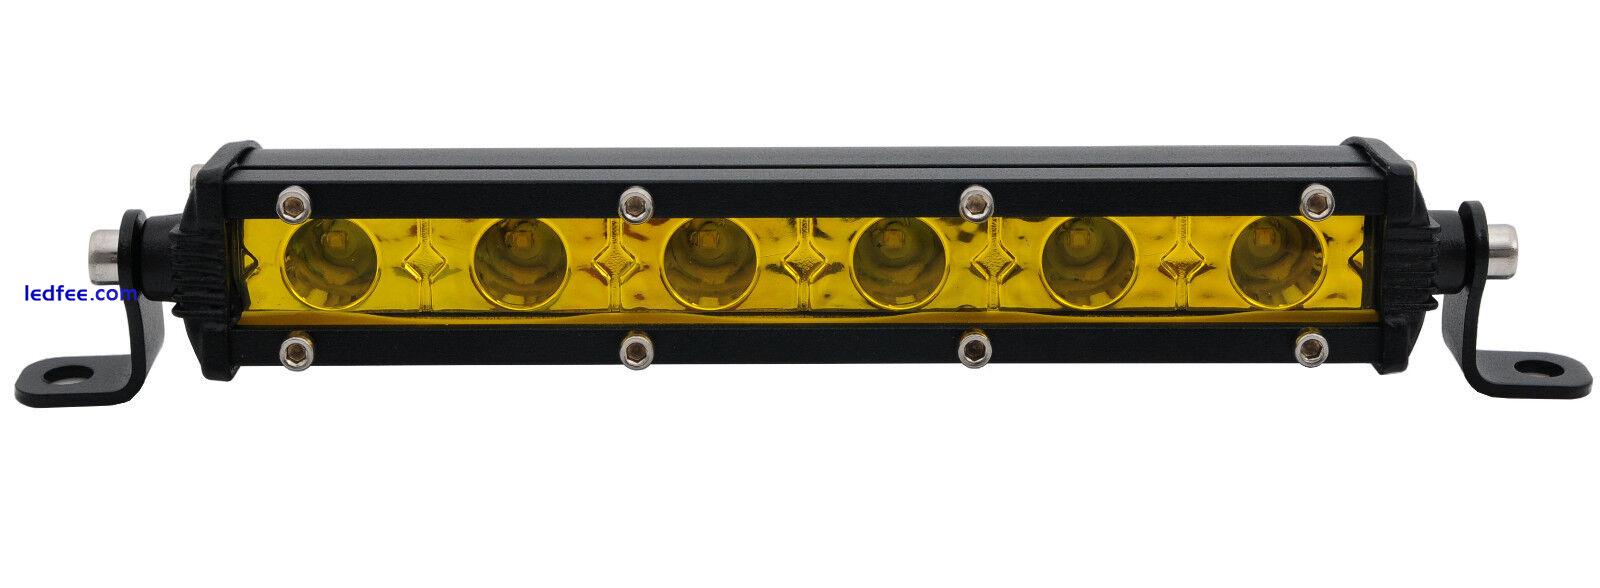 7"inch Yellow Spot Slim LED Work Light Bar Single Row Car SUV Truck Offroad Lamp 4 